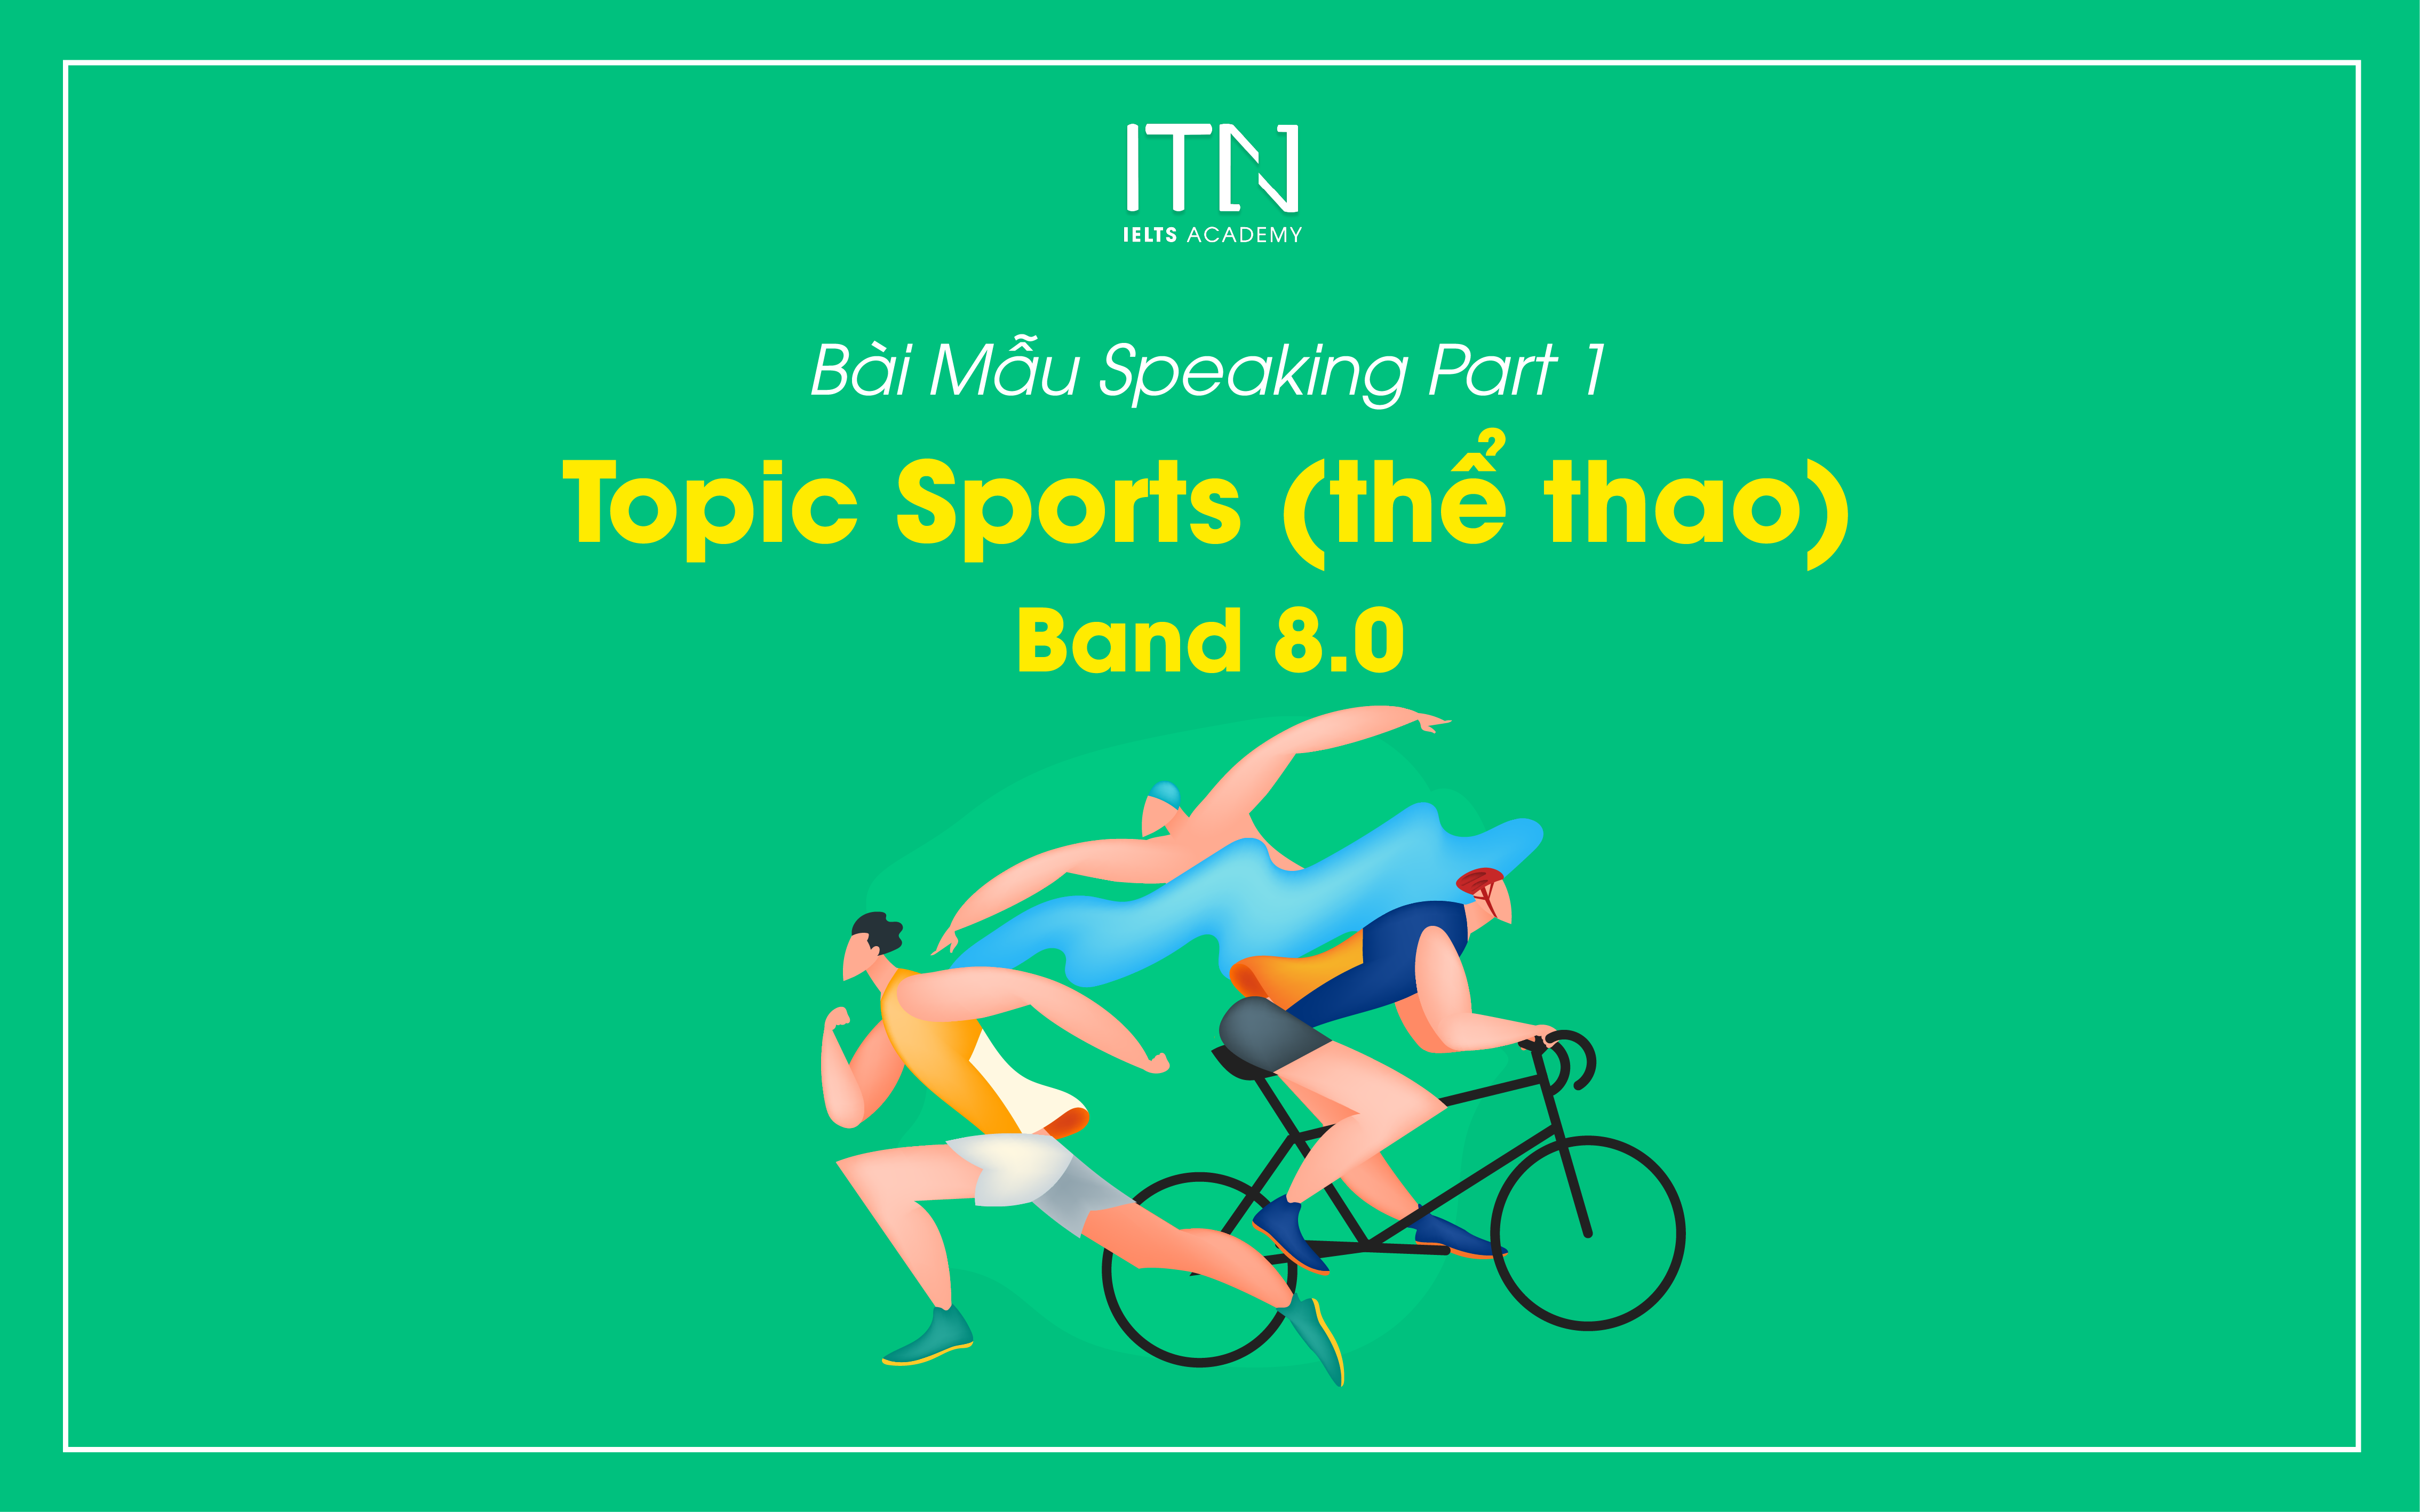 Topic Sports (Thể Thao) - Bài Mẫu Speaking Part 1 Band 8.0